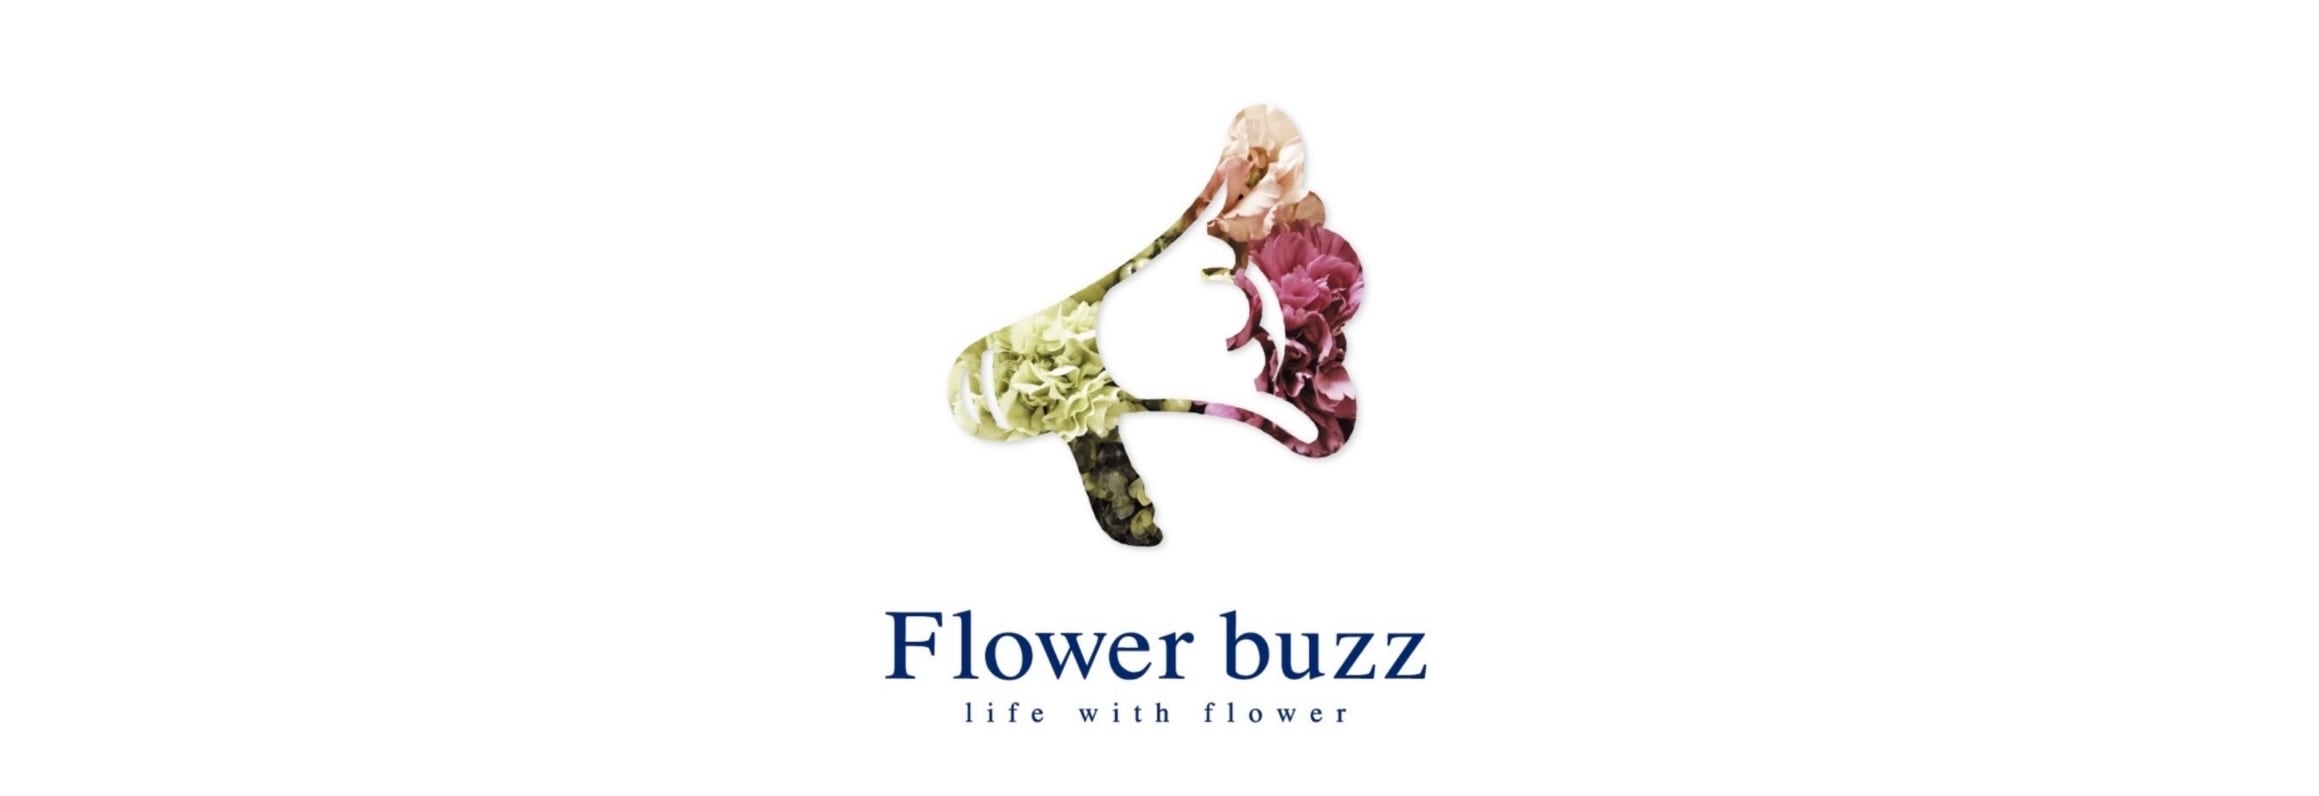 Flower buzz